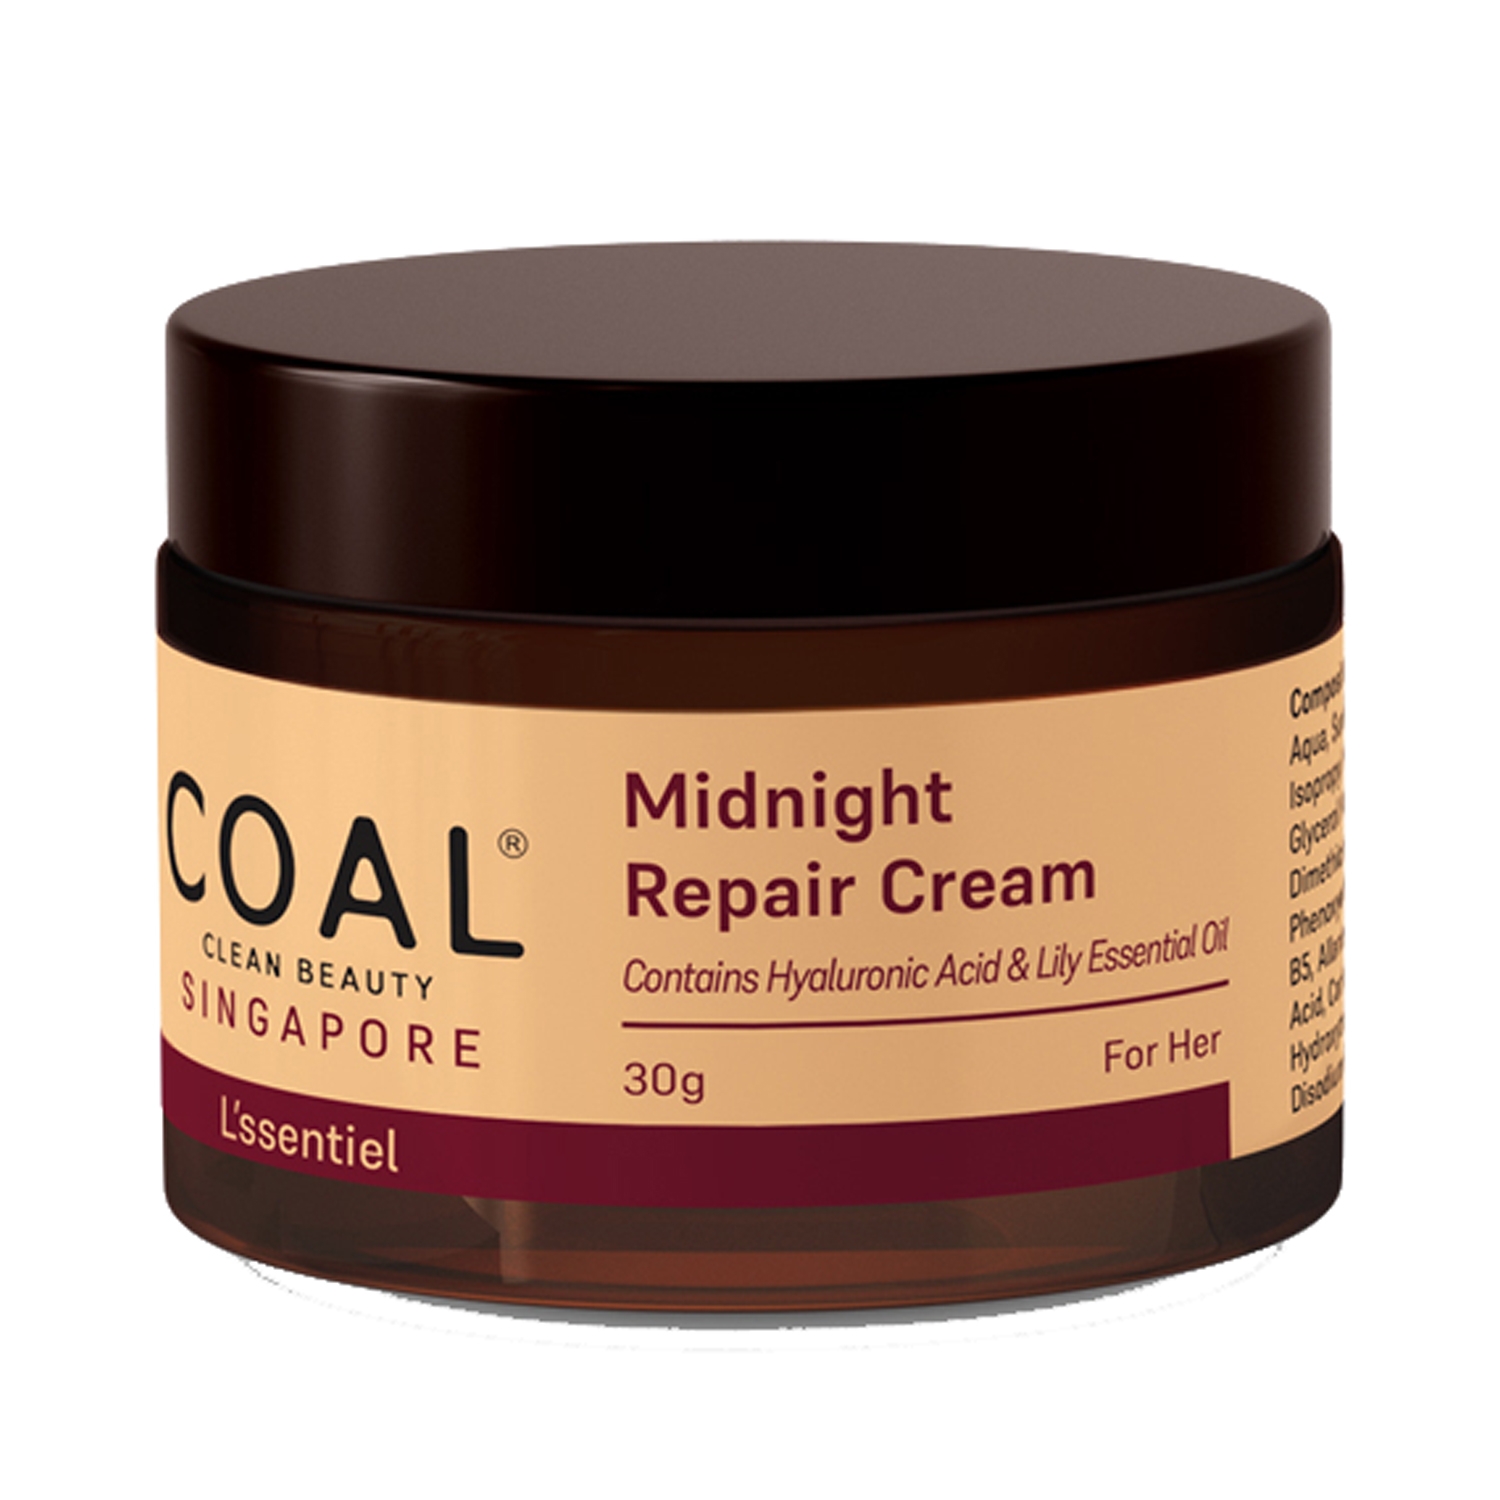 COAL CLEAN BEAUTY | COAL CLEAN BEAUTY Midnight Repair Cream For Her (30g)